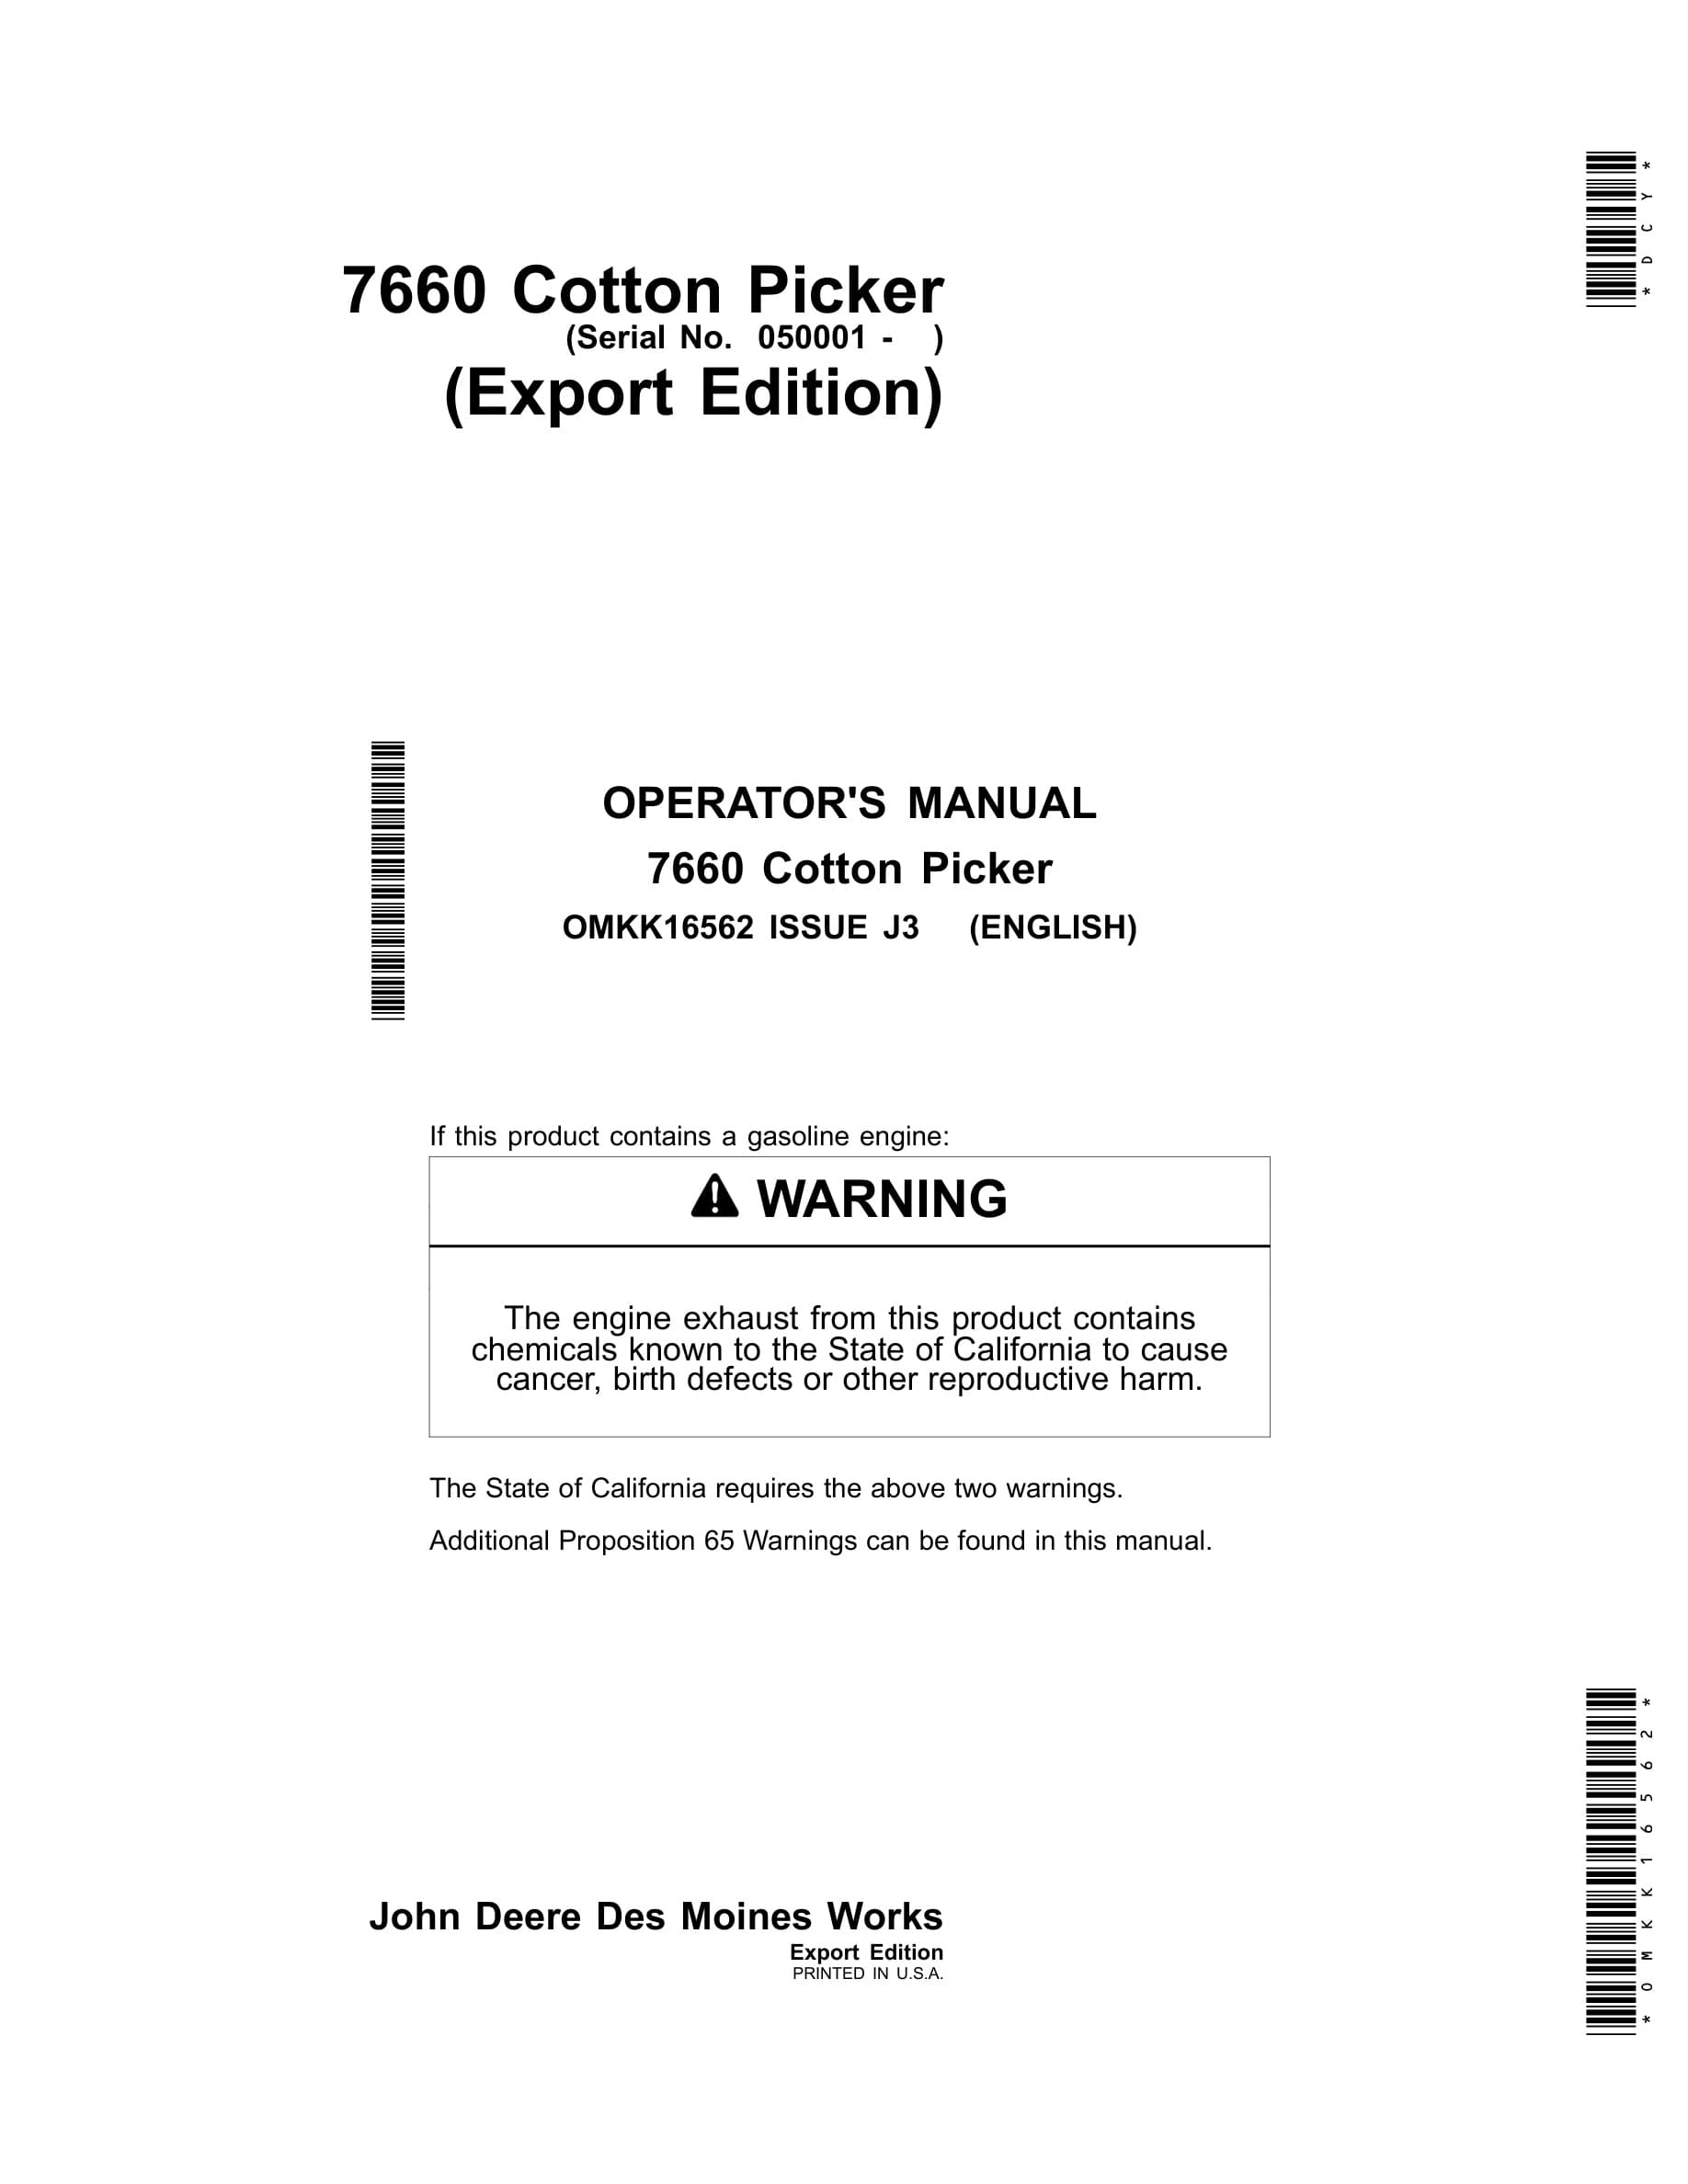 John Deere 7660 Cotton Picker Operator Manual OMKK16562-1